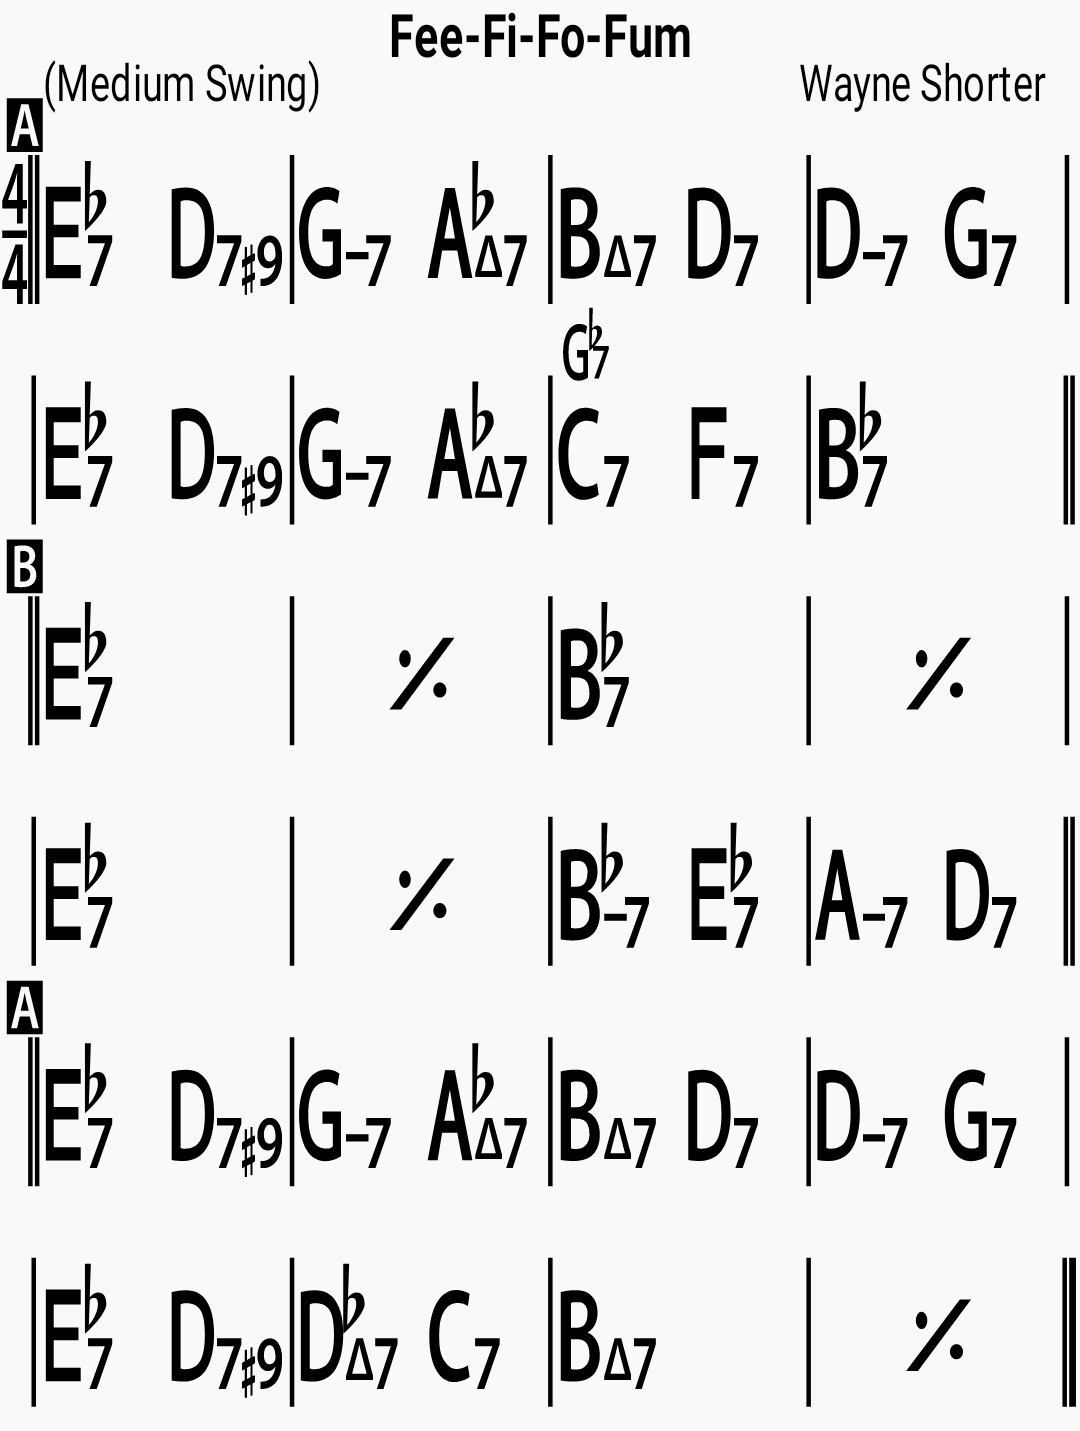 Chord chart for the jazz standard Fee Fi Fo Fum